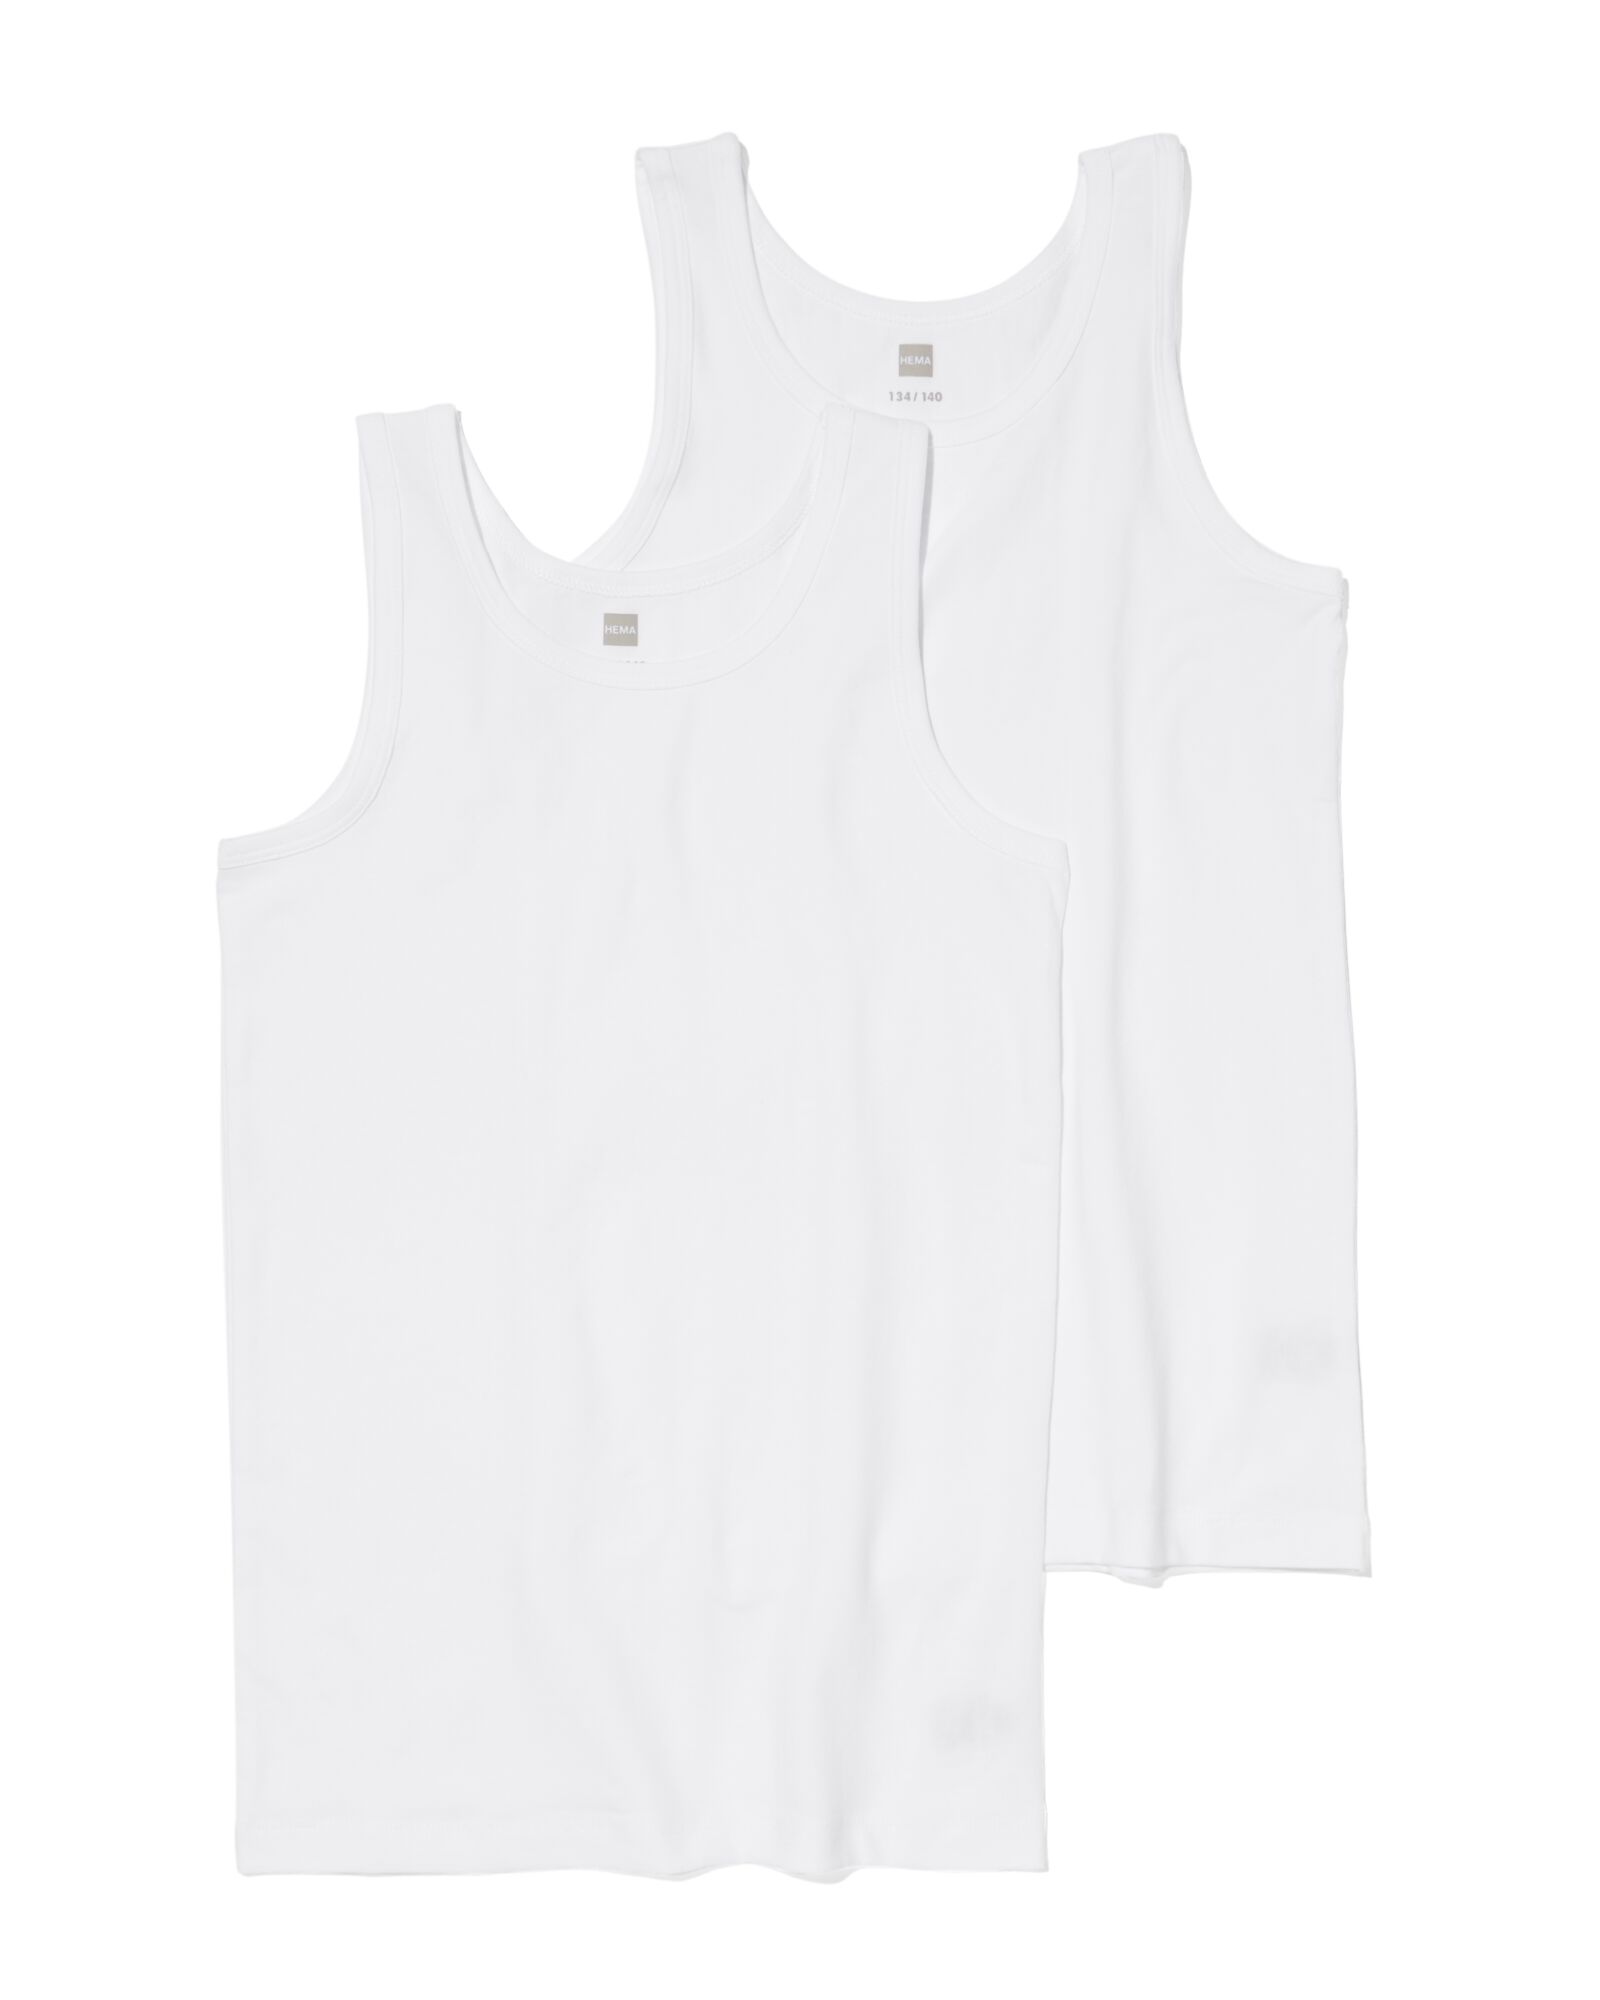 kinder hemden basic stretch katoen - 2 stuks wit - HEMA